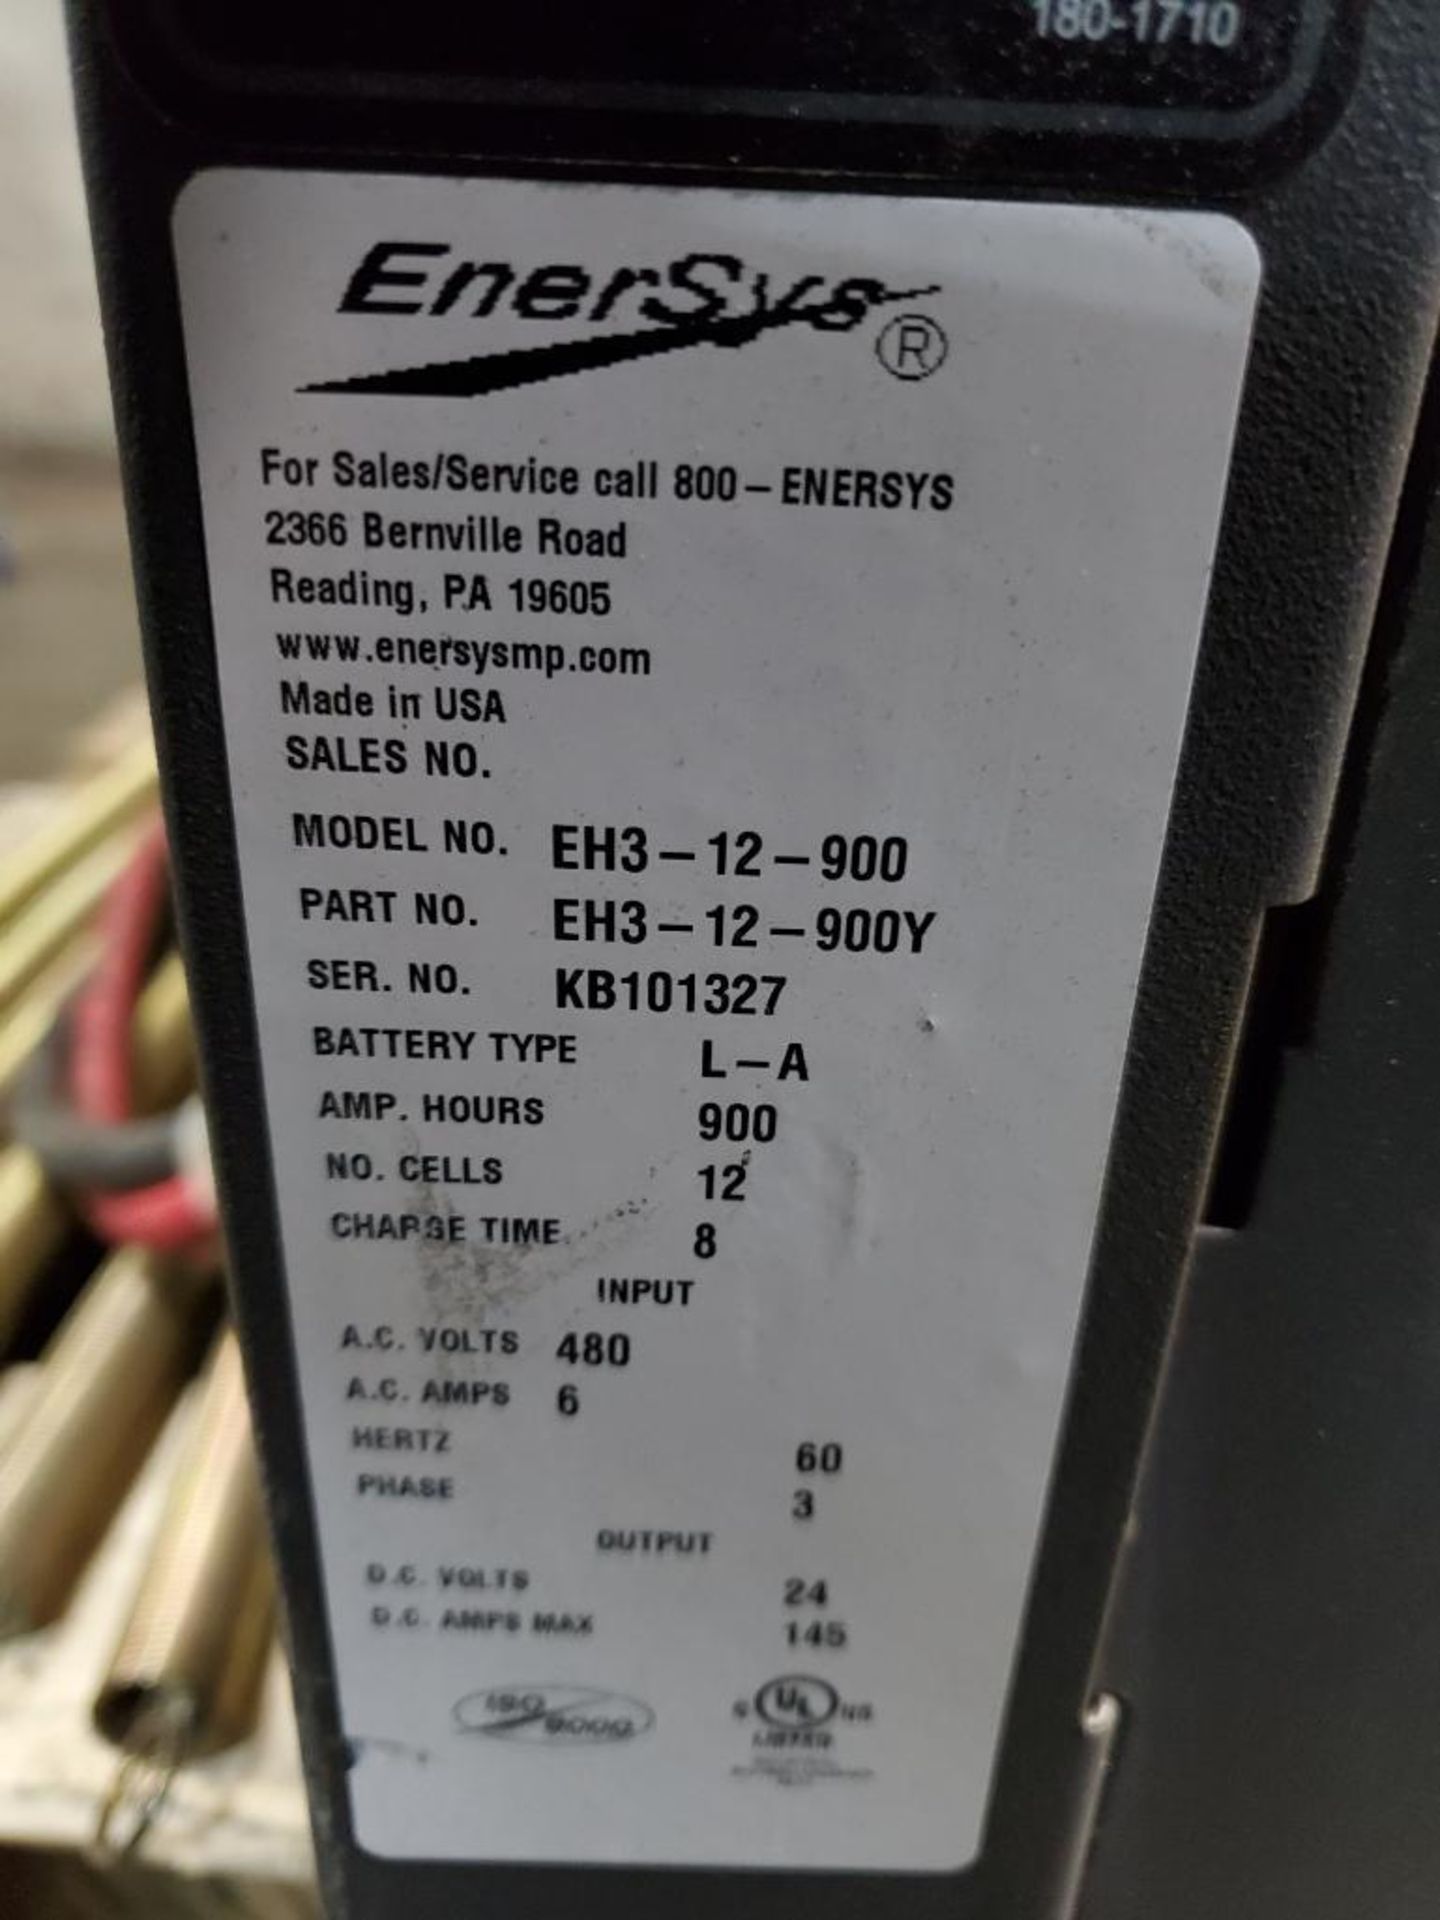 (2x) EnerSys Enforcer Battery Chargers, Model EH3-12-900, Input: 480V, 3-Phase, Output: 24V, 145 Amp - Image 3 of 5